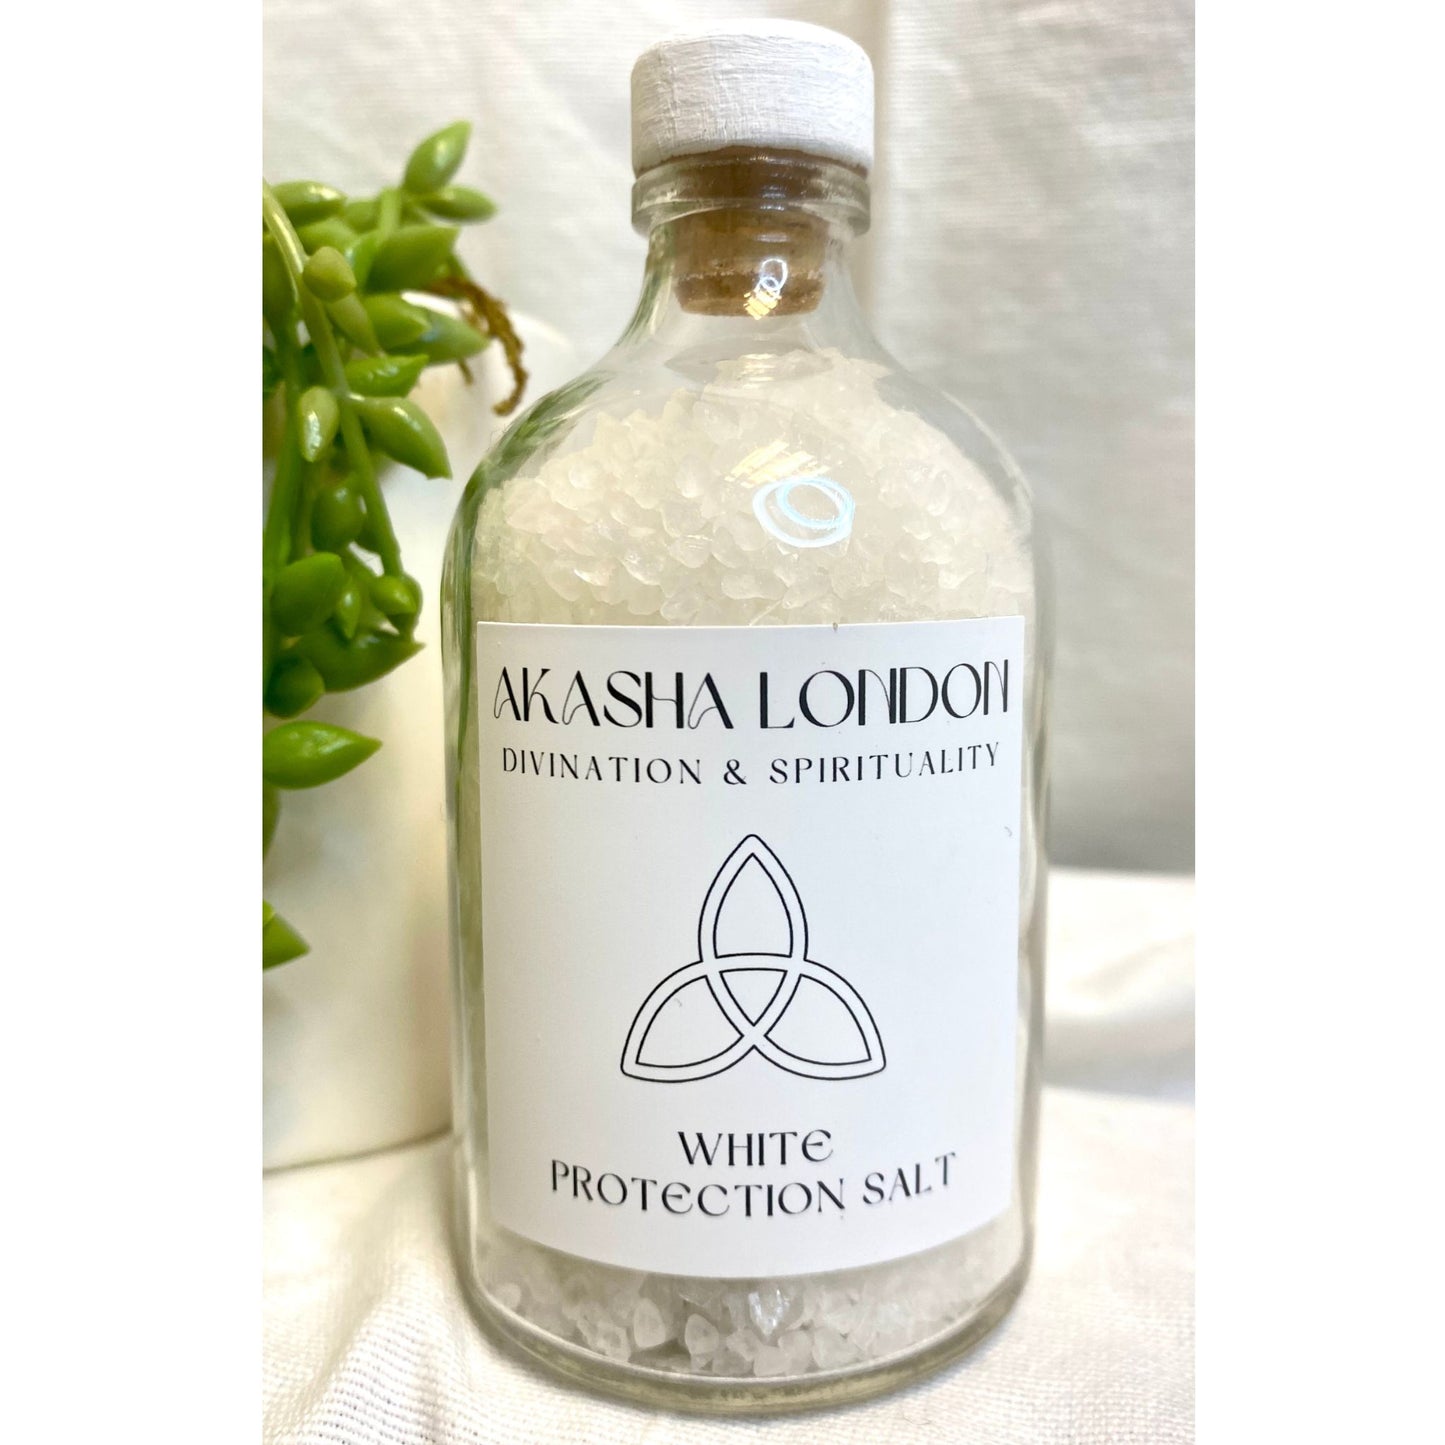 White Protection Ritual & Spell Salt